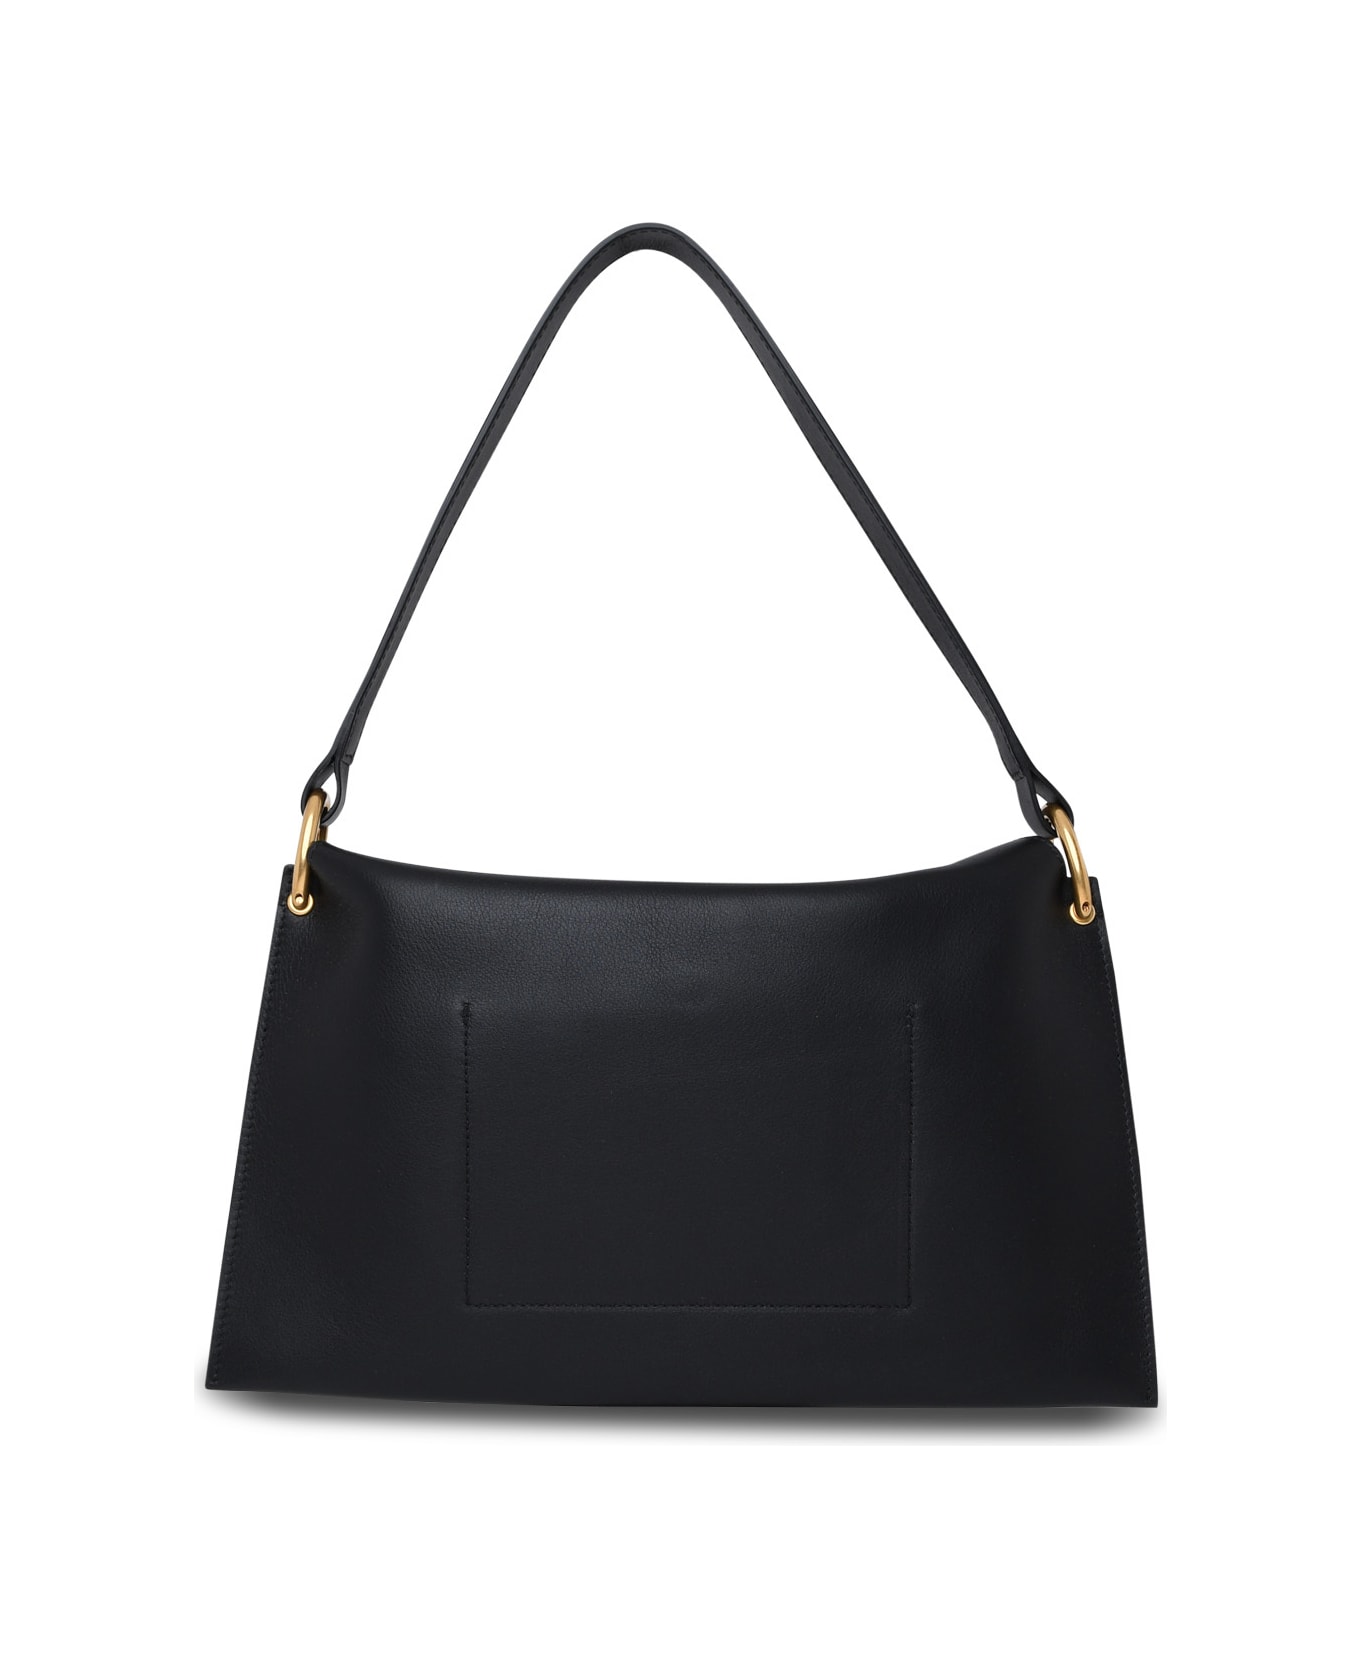 Proenza Schouler Braid Bag In Black Leather - Black